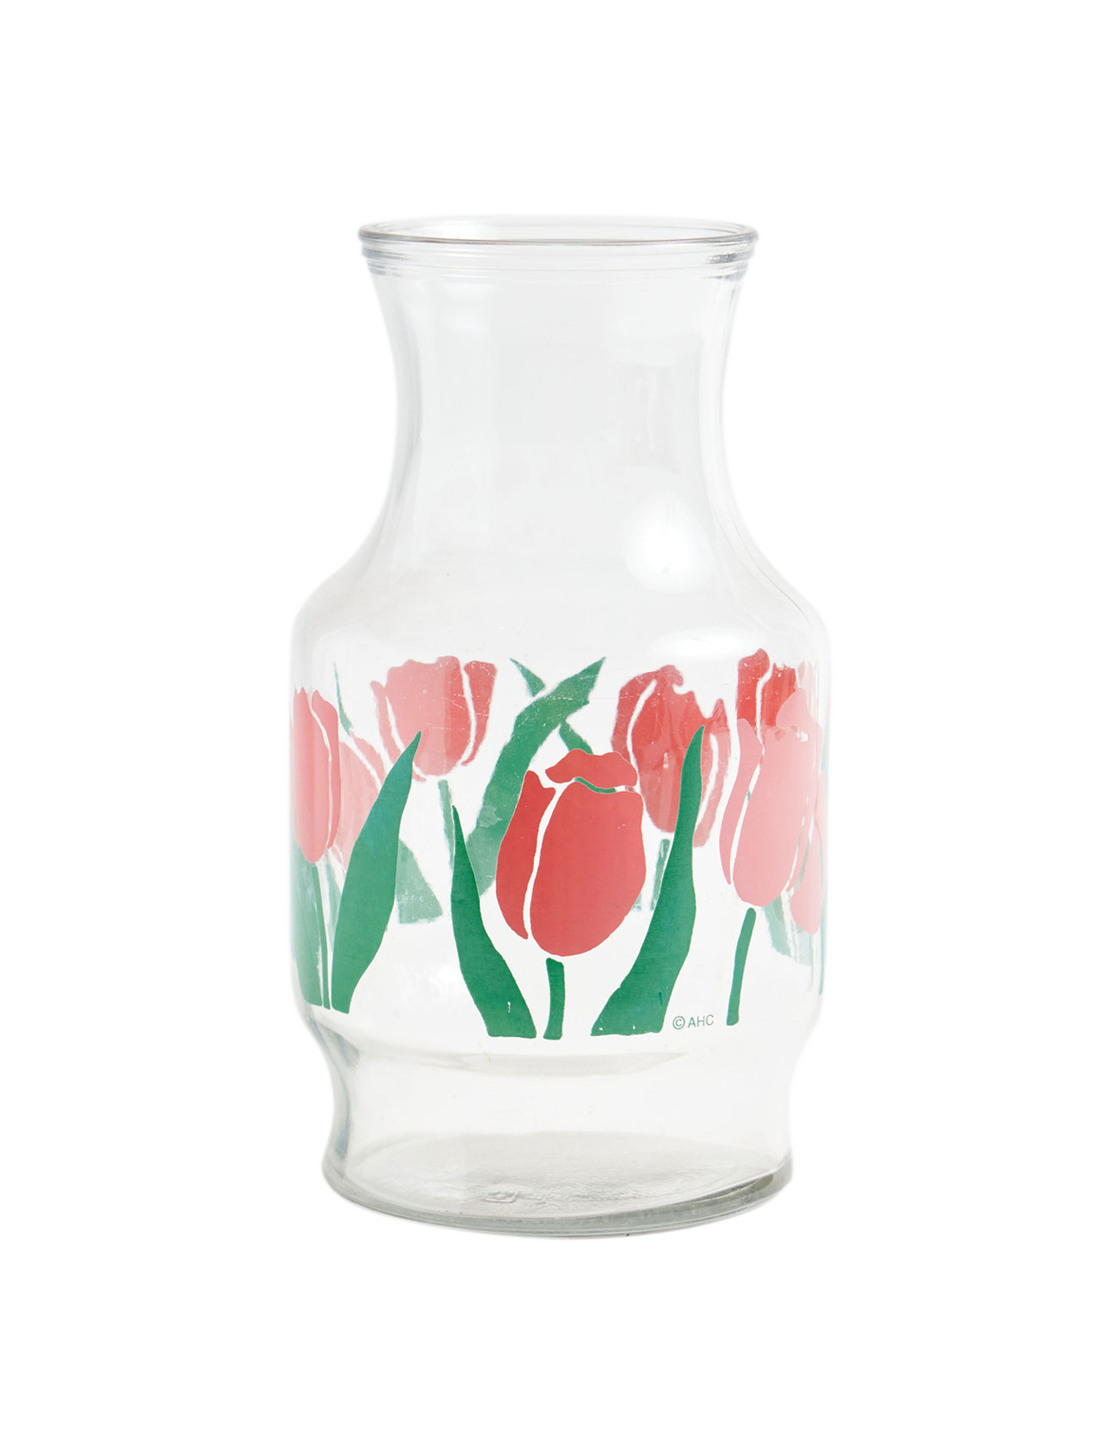 Tulip Vase – The Six Bells